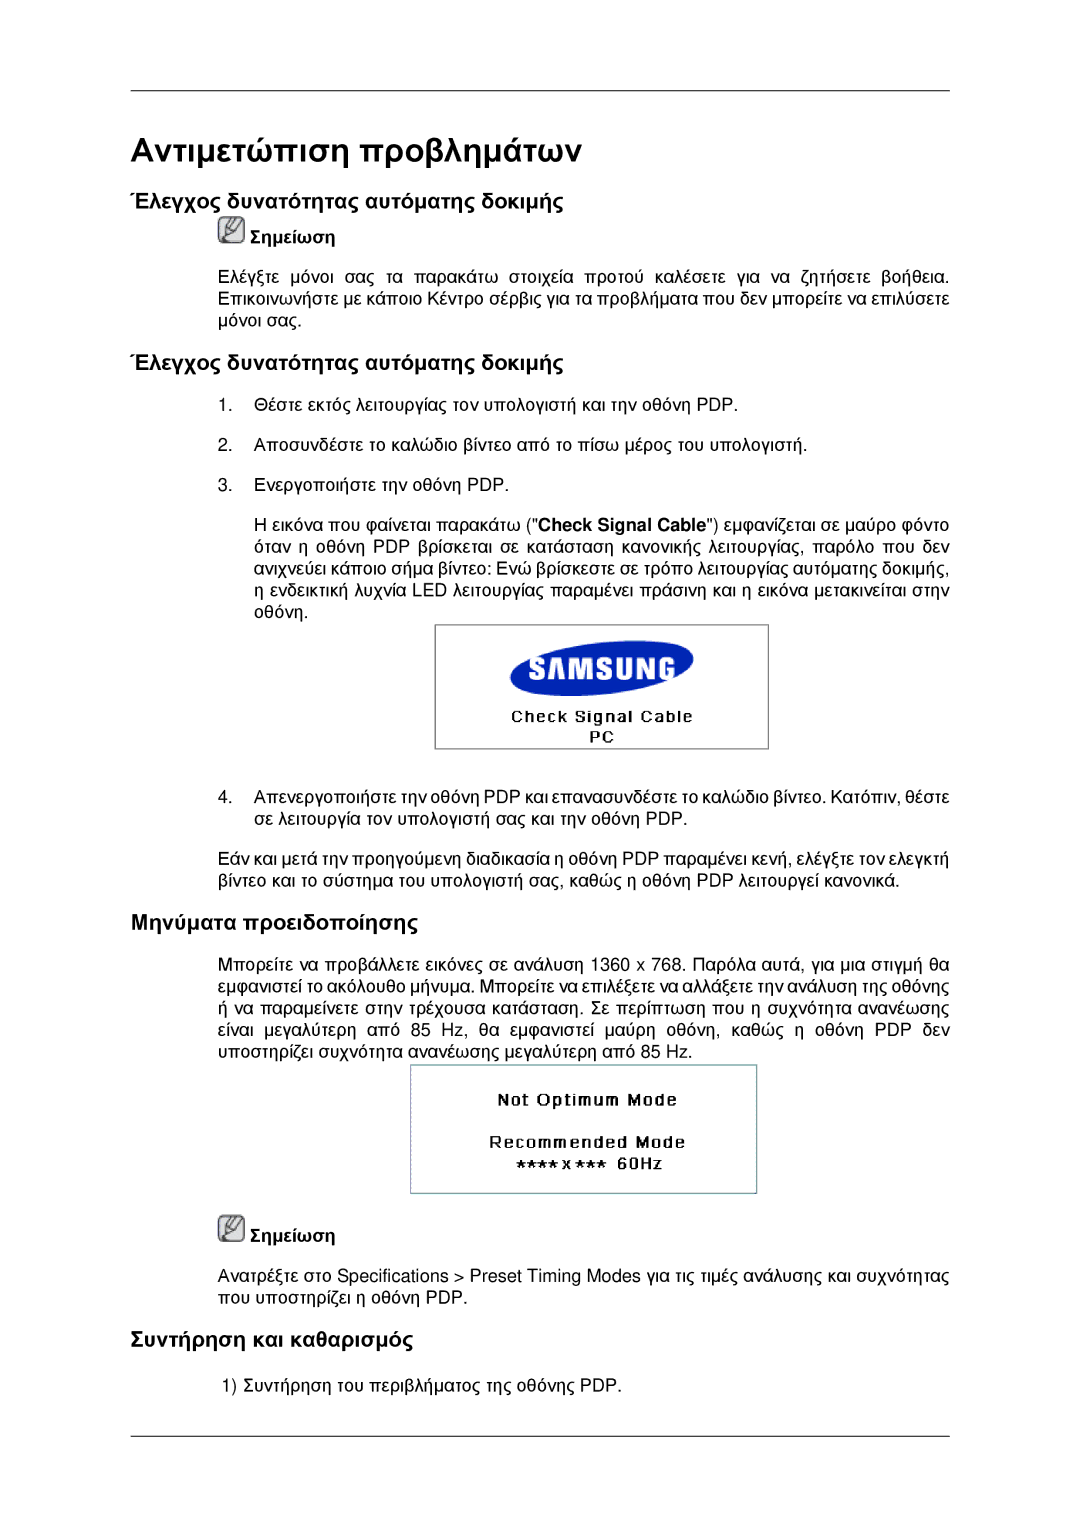 Samsung PH42KPPLBC/EN manual Έλεγχος δυνατότητας αυτόματης δοκιμής, Μηνύματα προειδοποίησης, Συντήρηση και καθαρισμός 